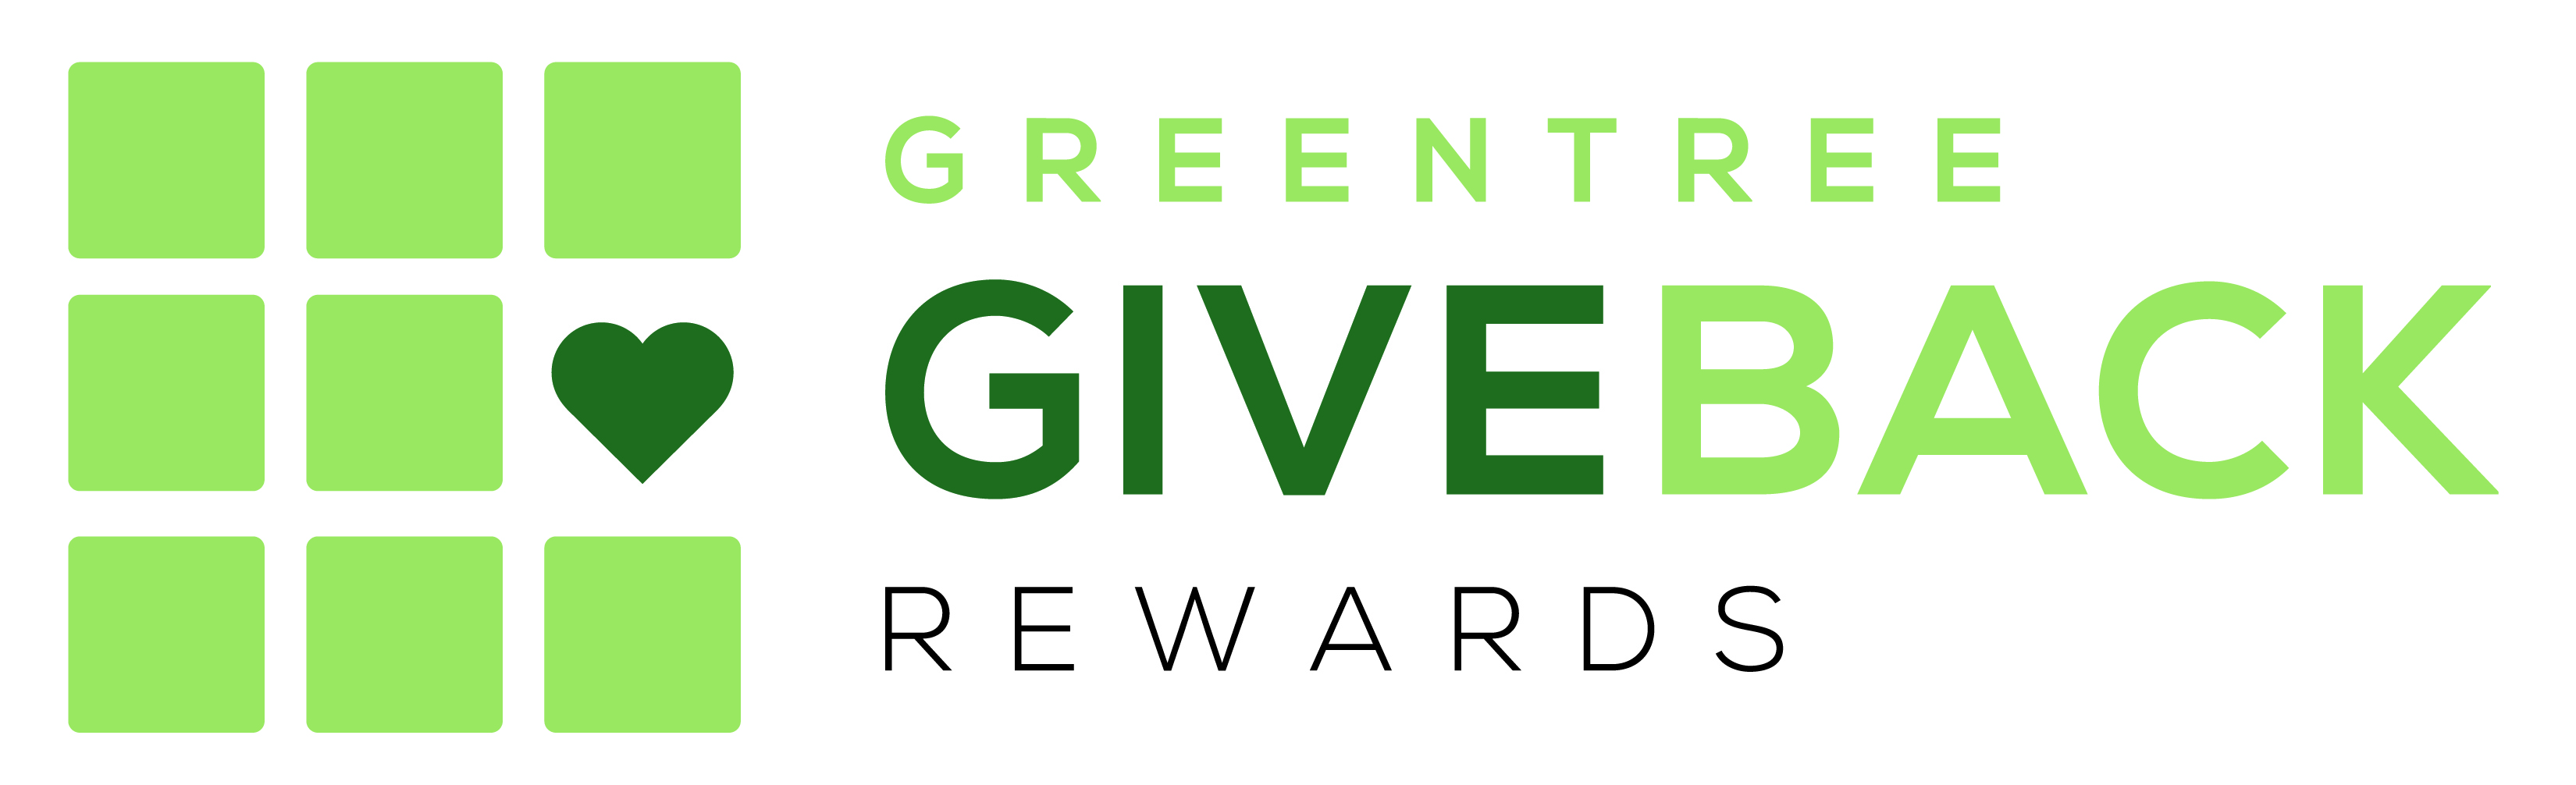 GreenTree GiveBack Rewards